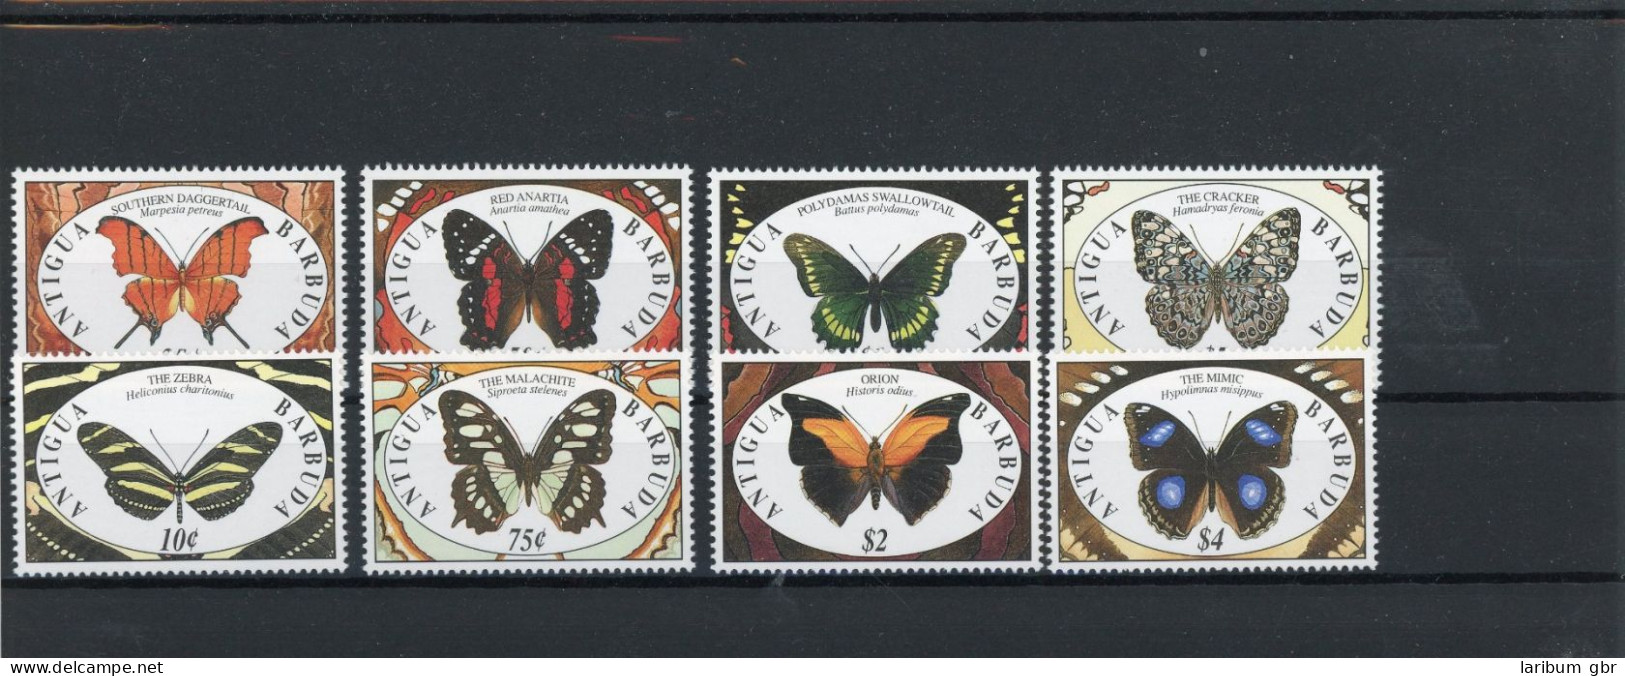 Antigua Und Barbuda 1475-1482 Postfrisch Schmetterlinge #JT992 - Antigua And Barbuda (1981-...)